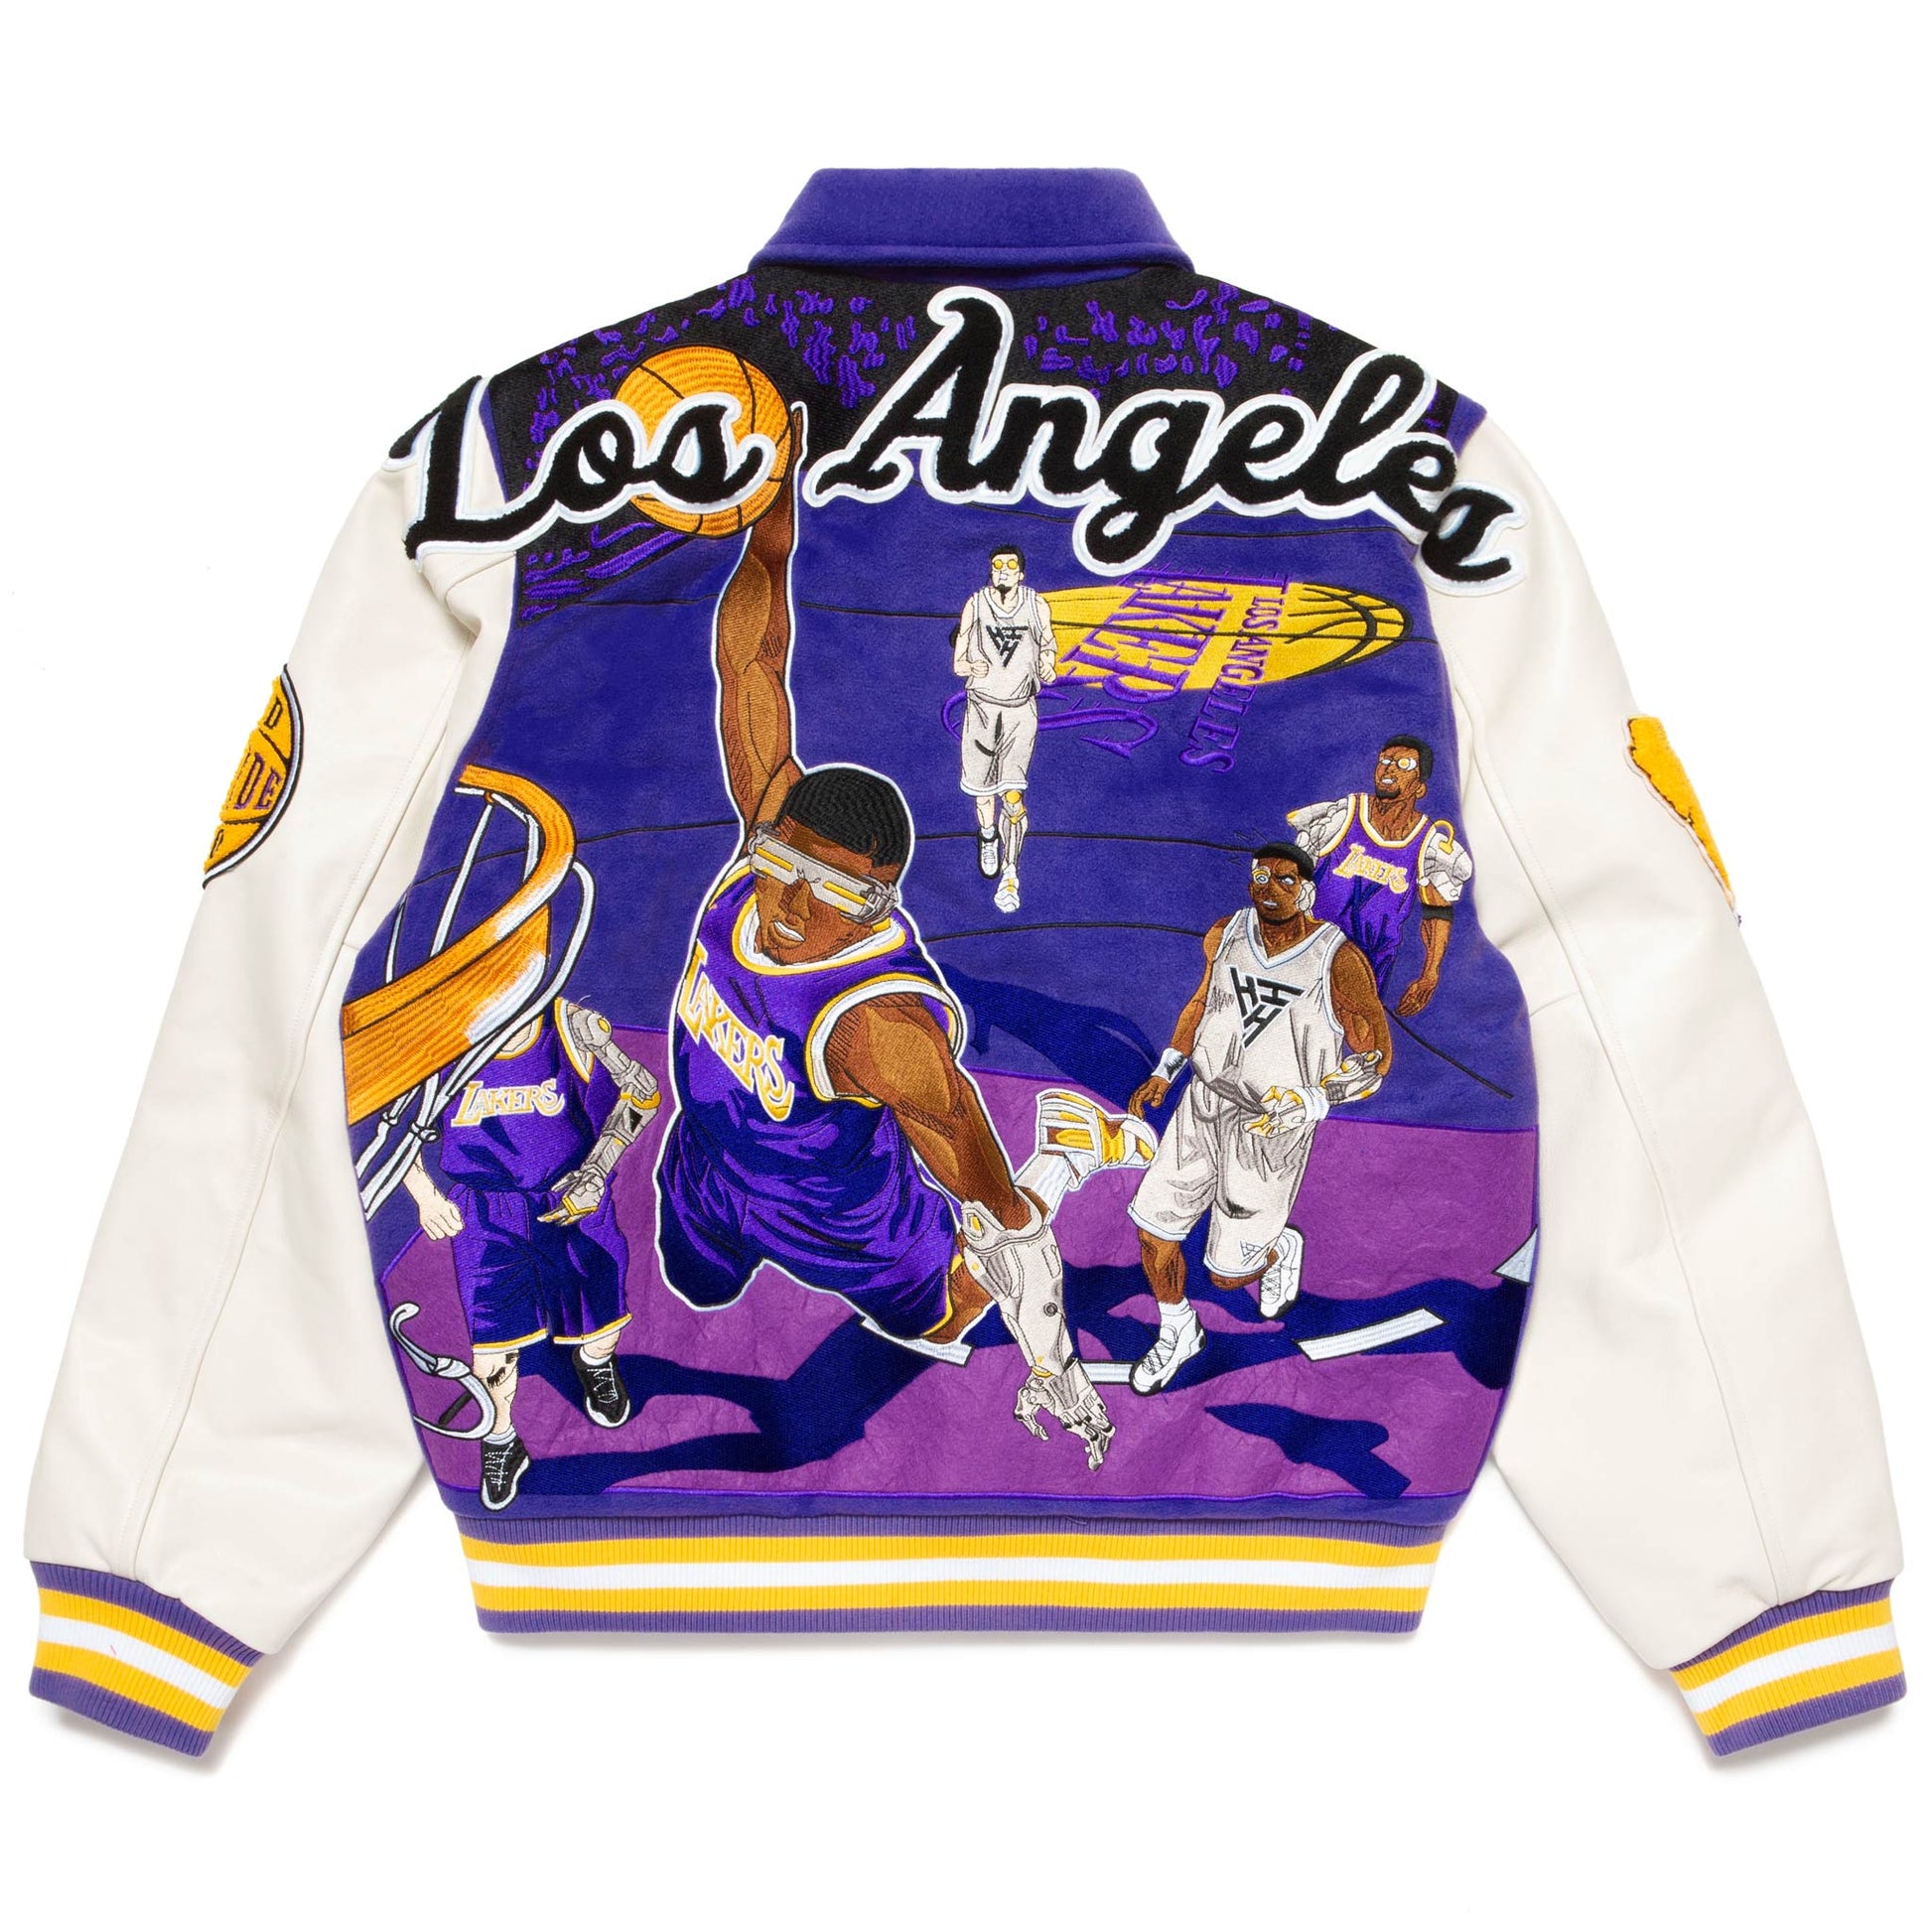  Lakers Jacket